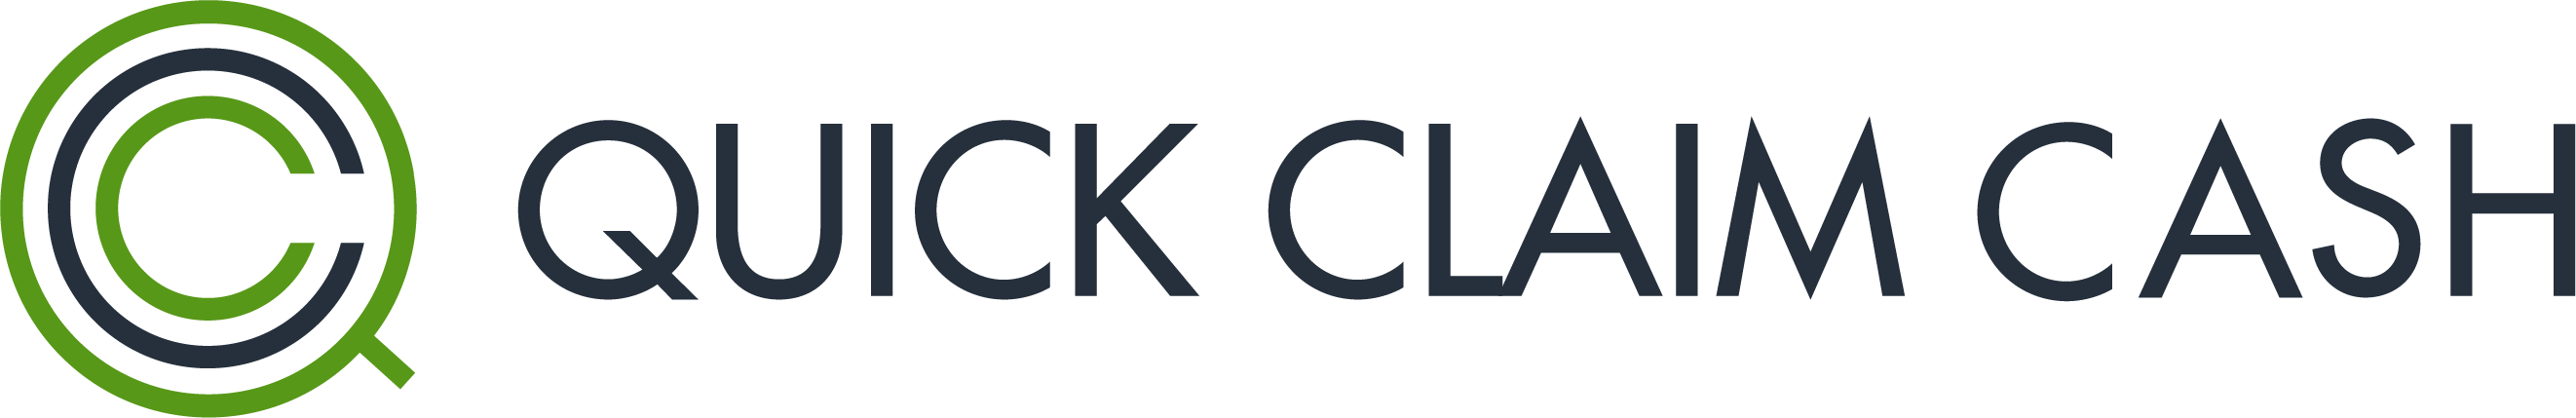 Qcc Logo Dark